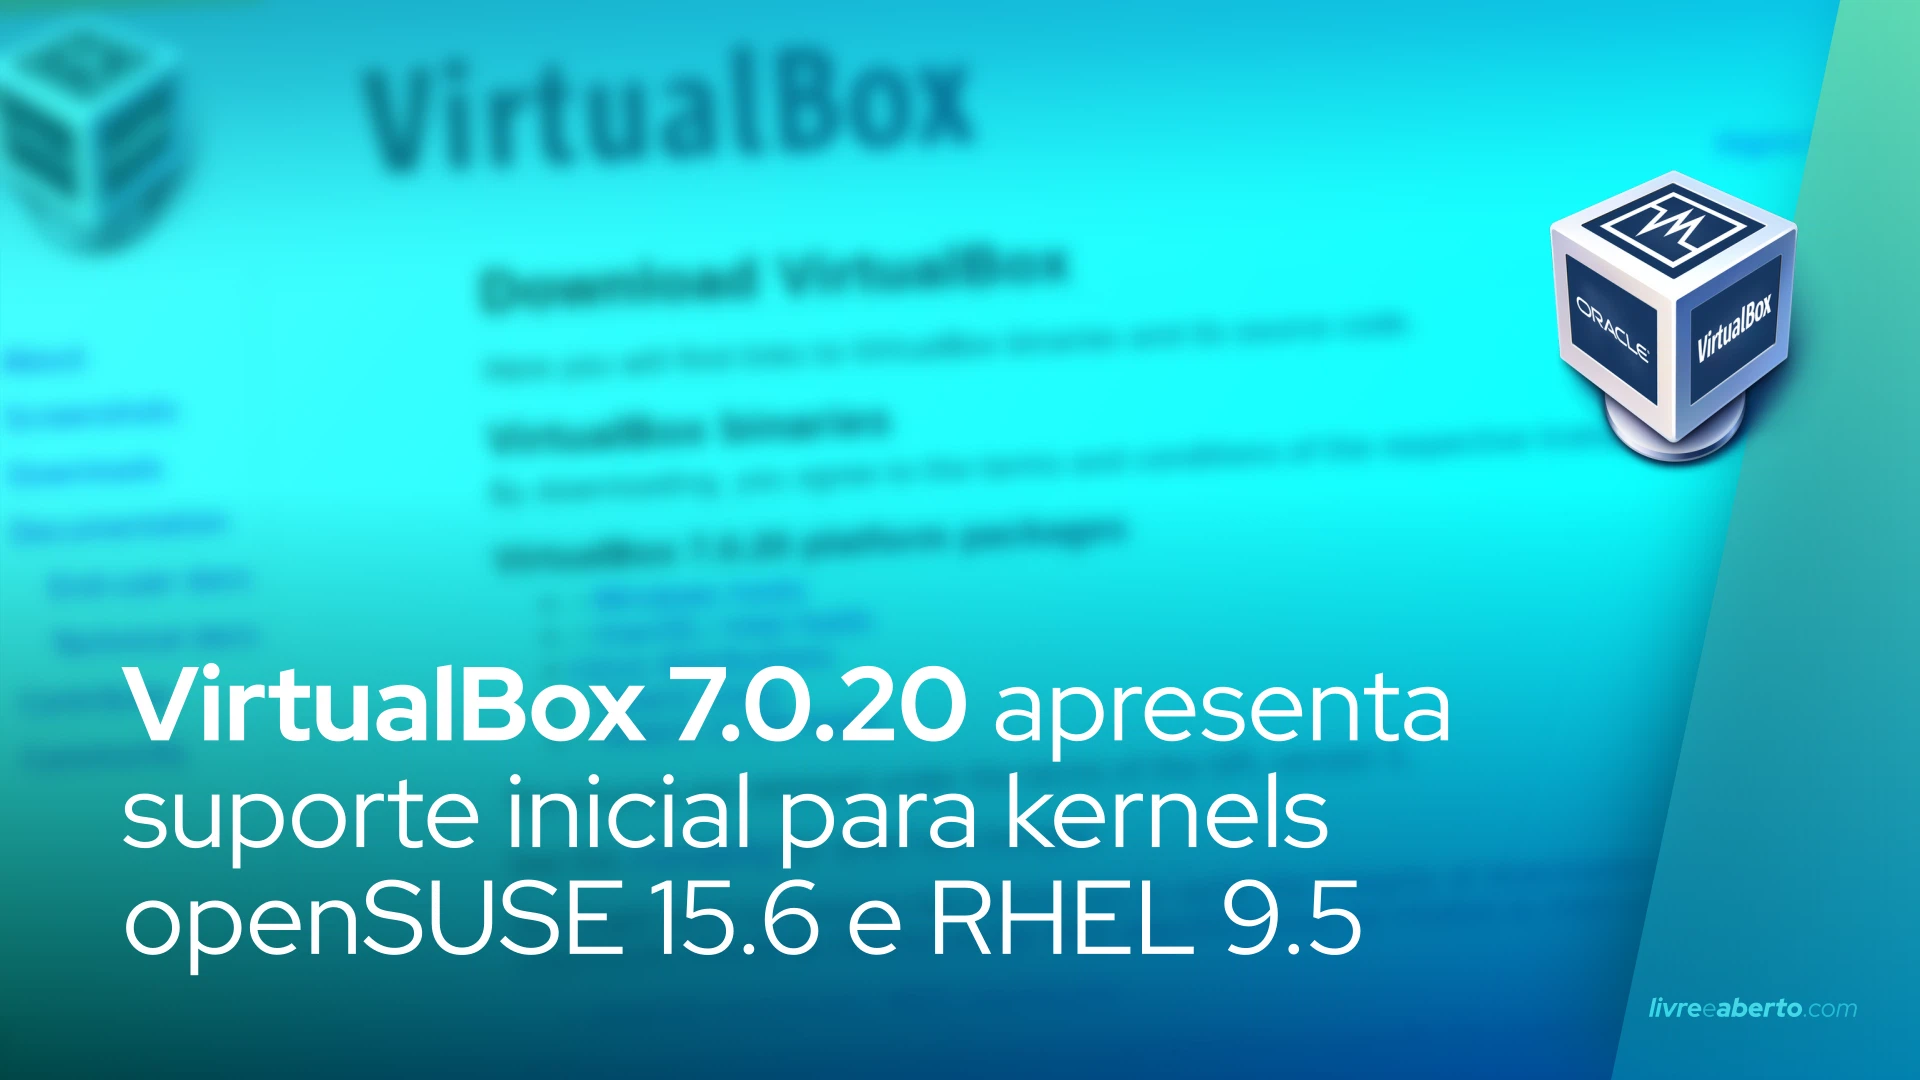 VirtualBox 7.0.20 apresenta suporte inicial para kernels openSUSE 15.6 e RHEL 9.5